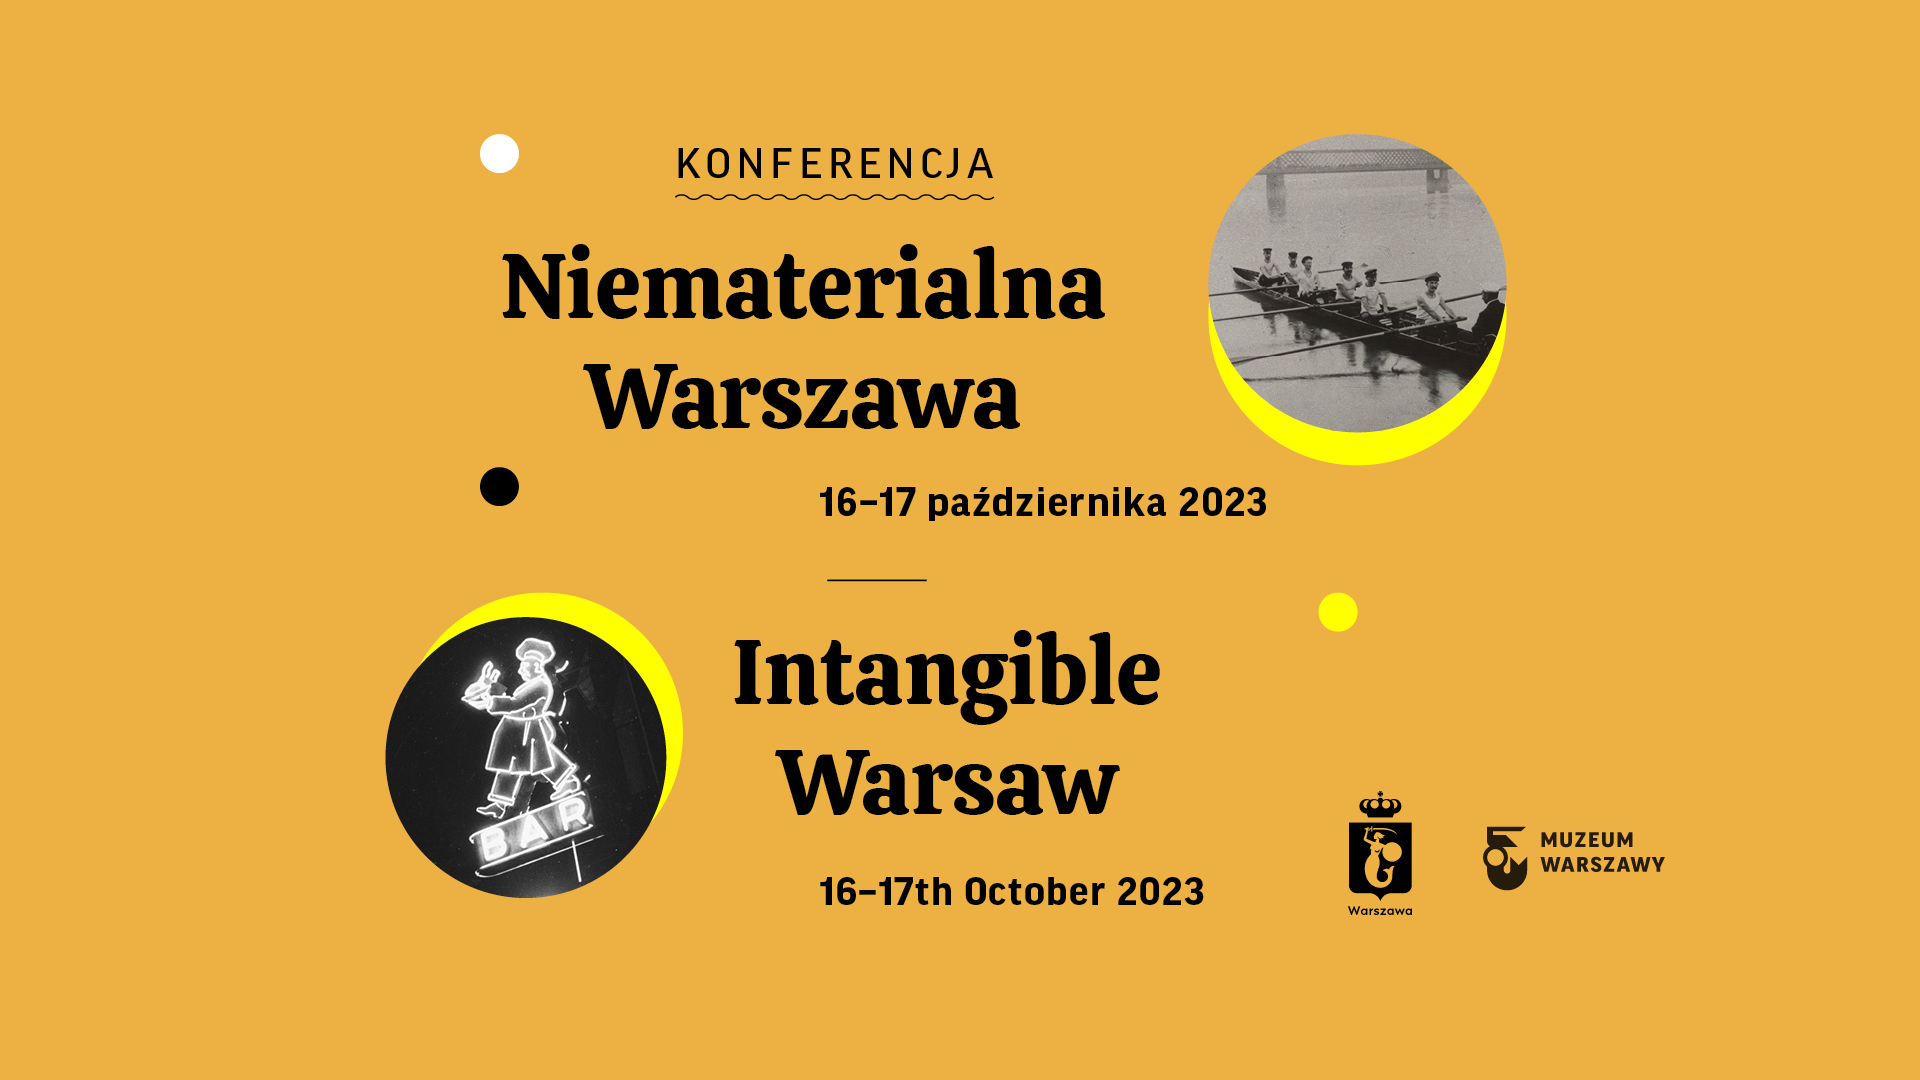 Intangible Warsaw